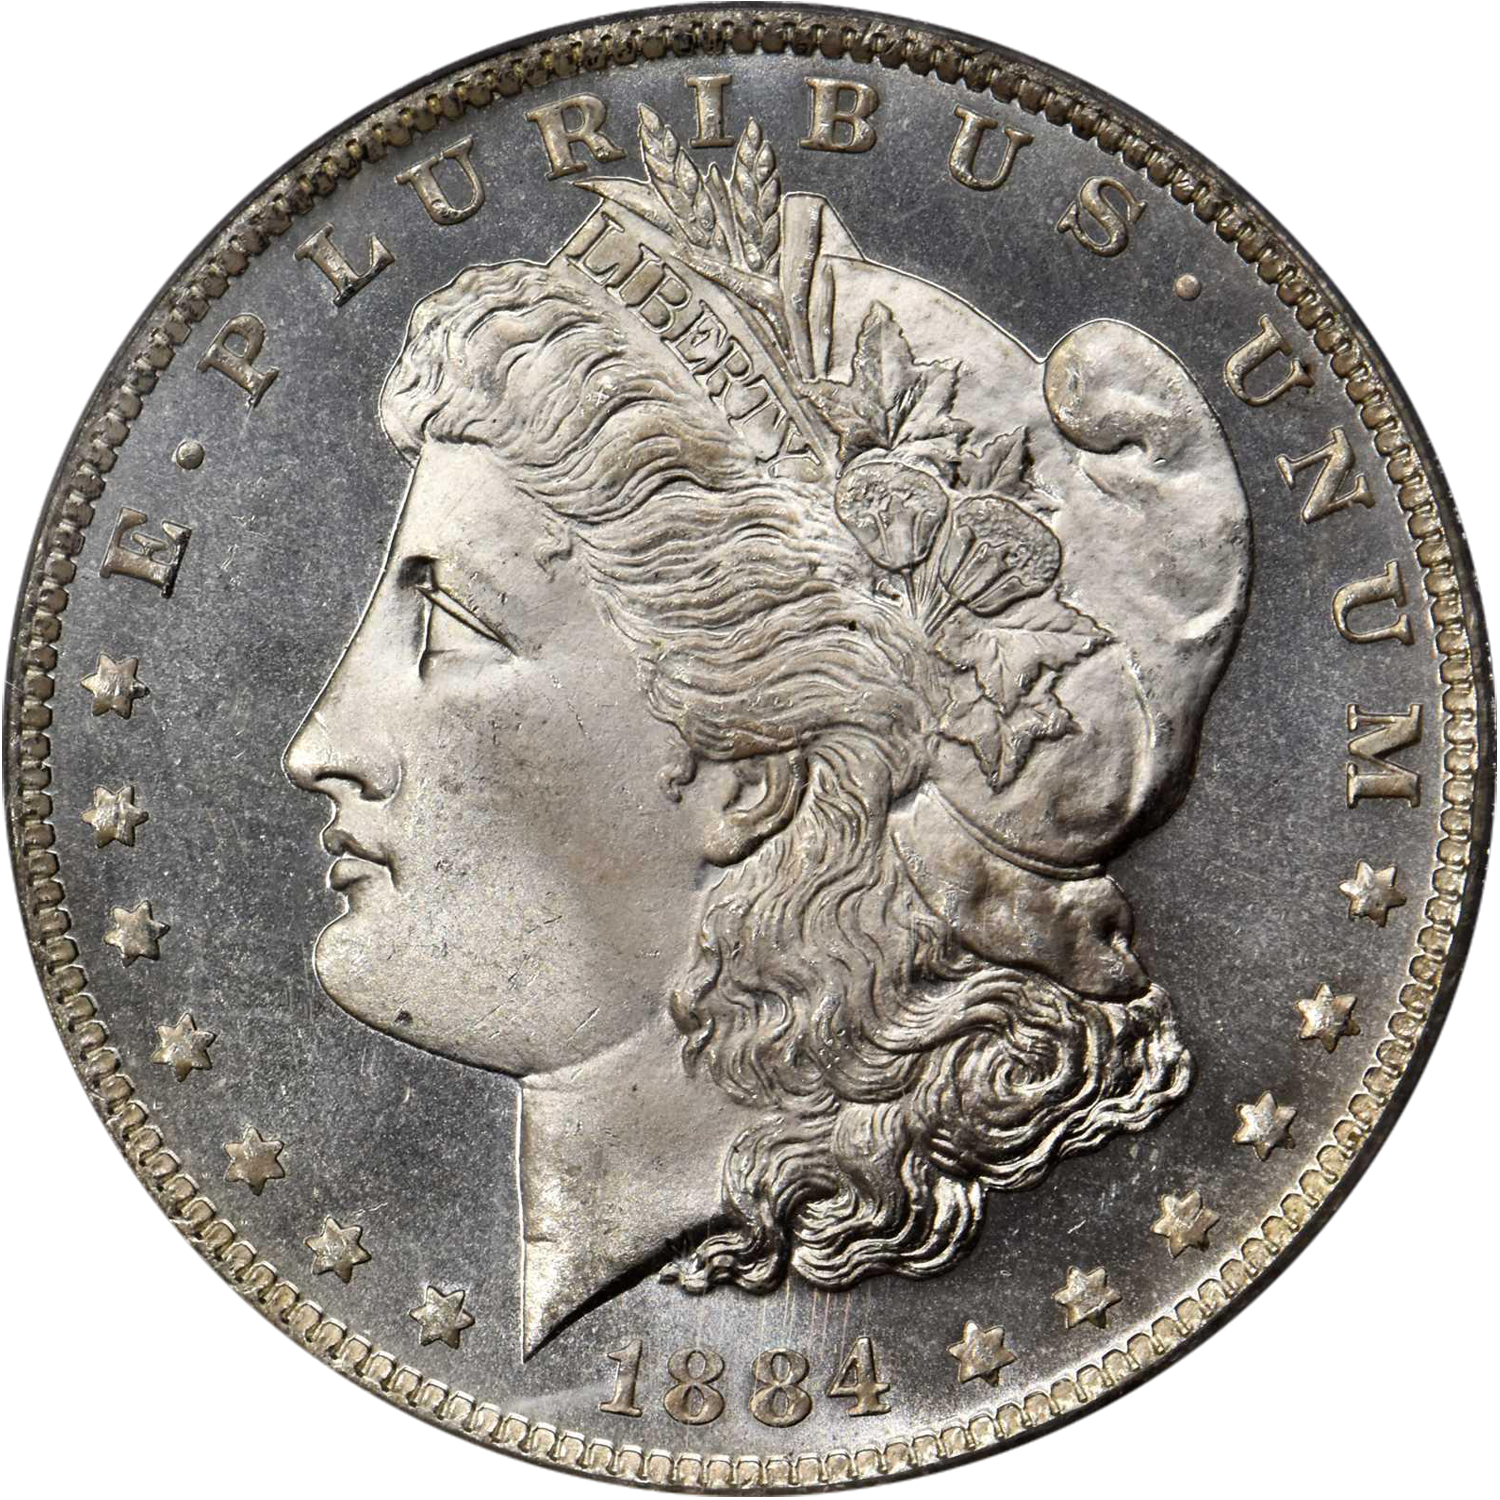 1884 new orleans morgan silver dollar